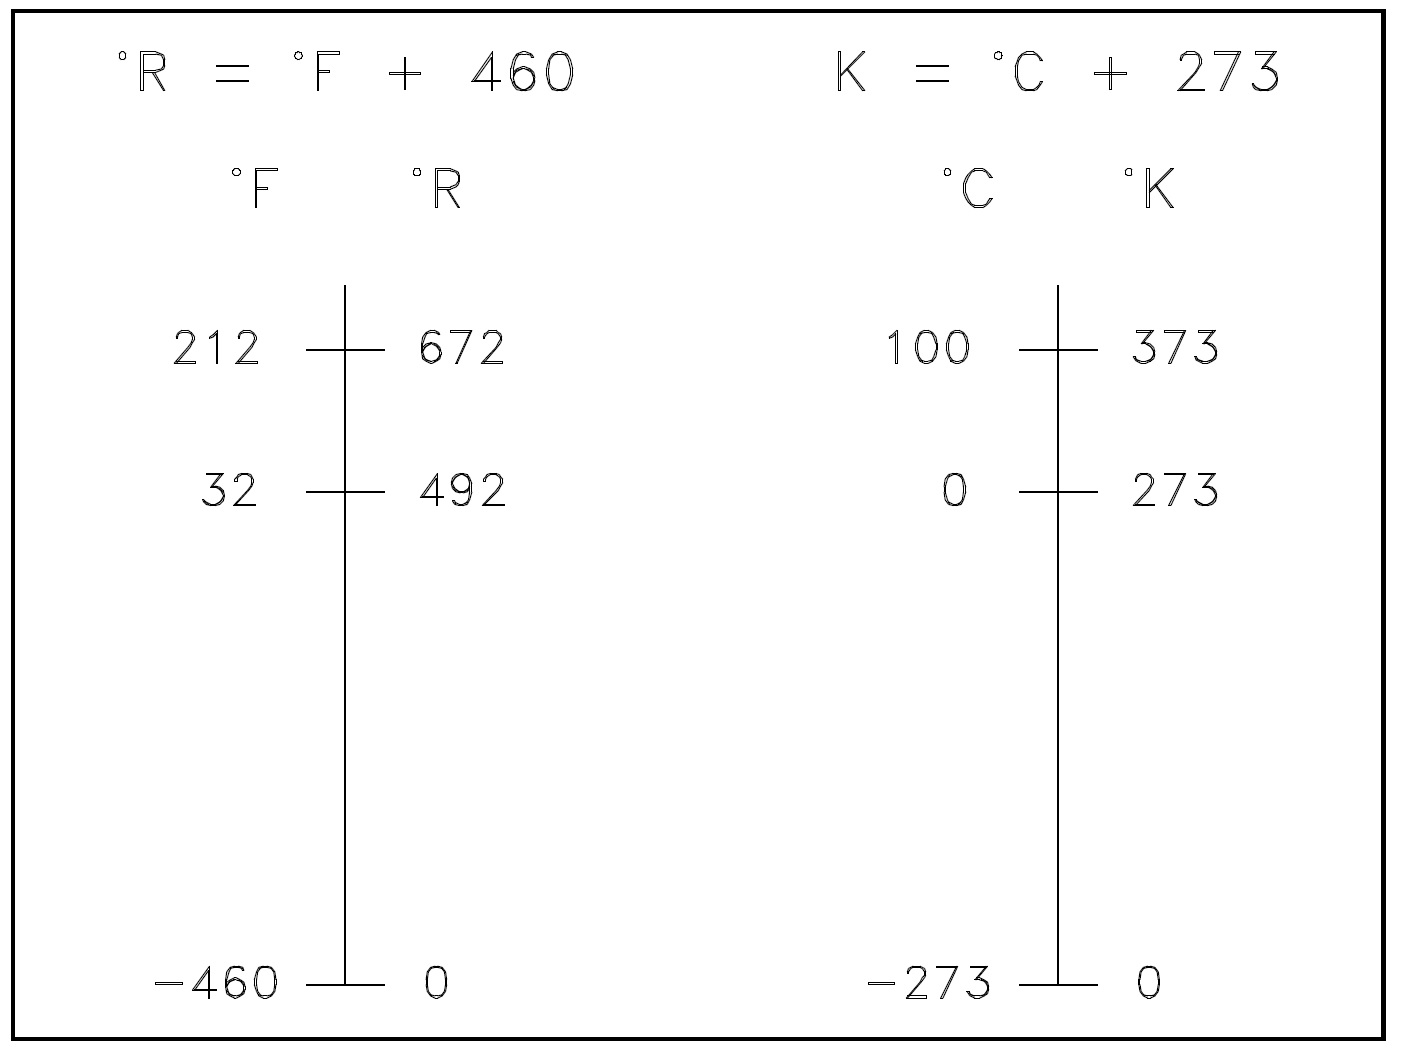 Figure 1: Comparison of Temperature Scales